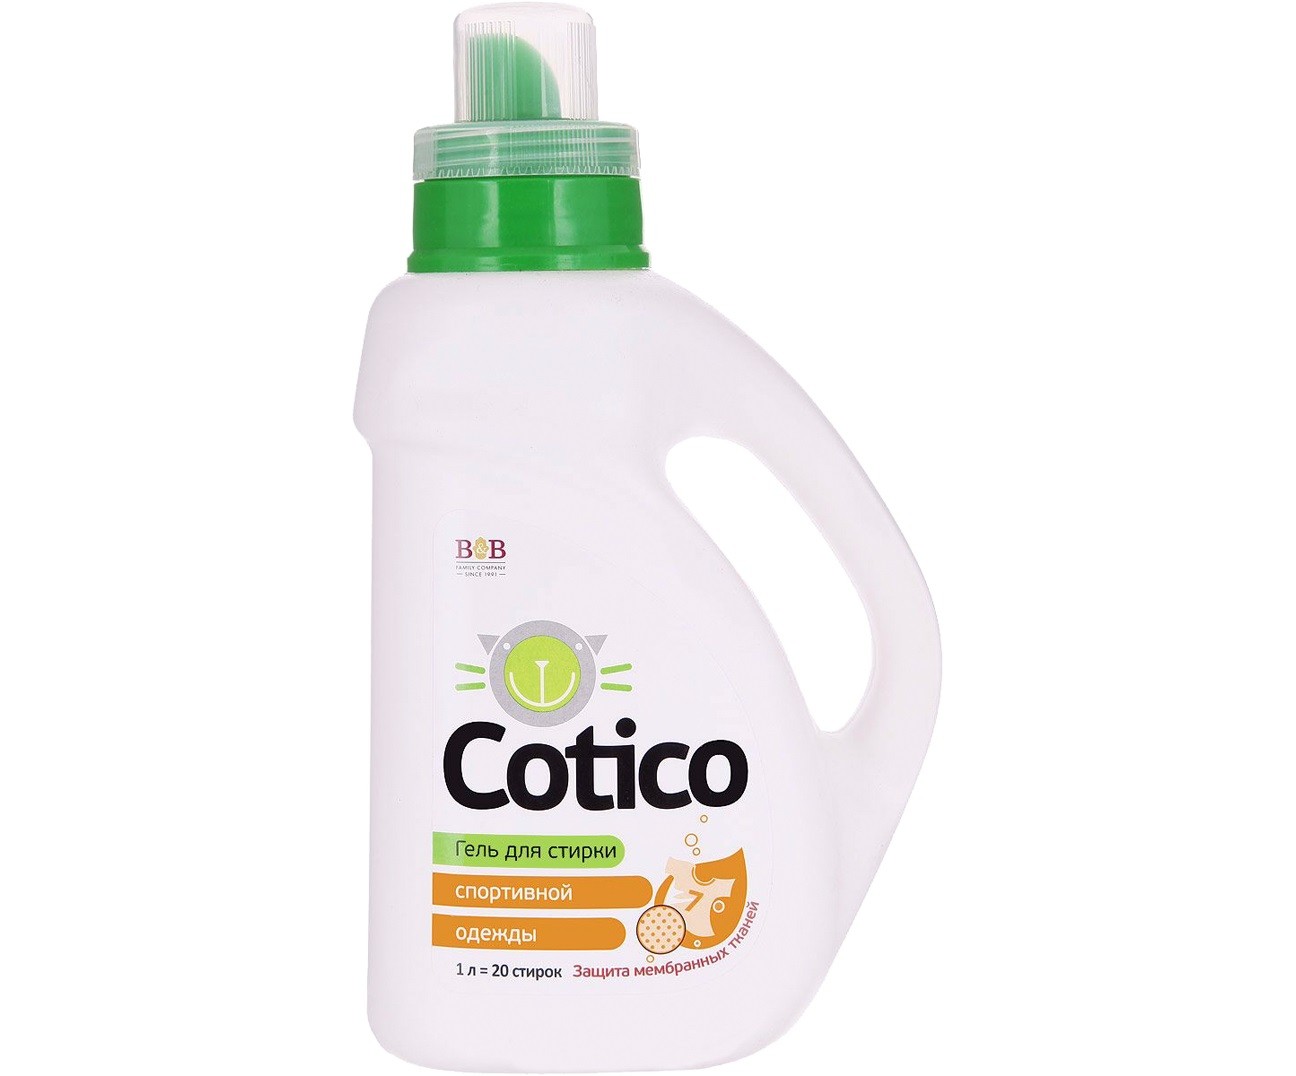 Cotico สำหรับชุดกีฬา